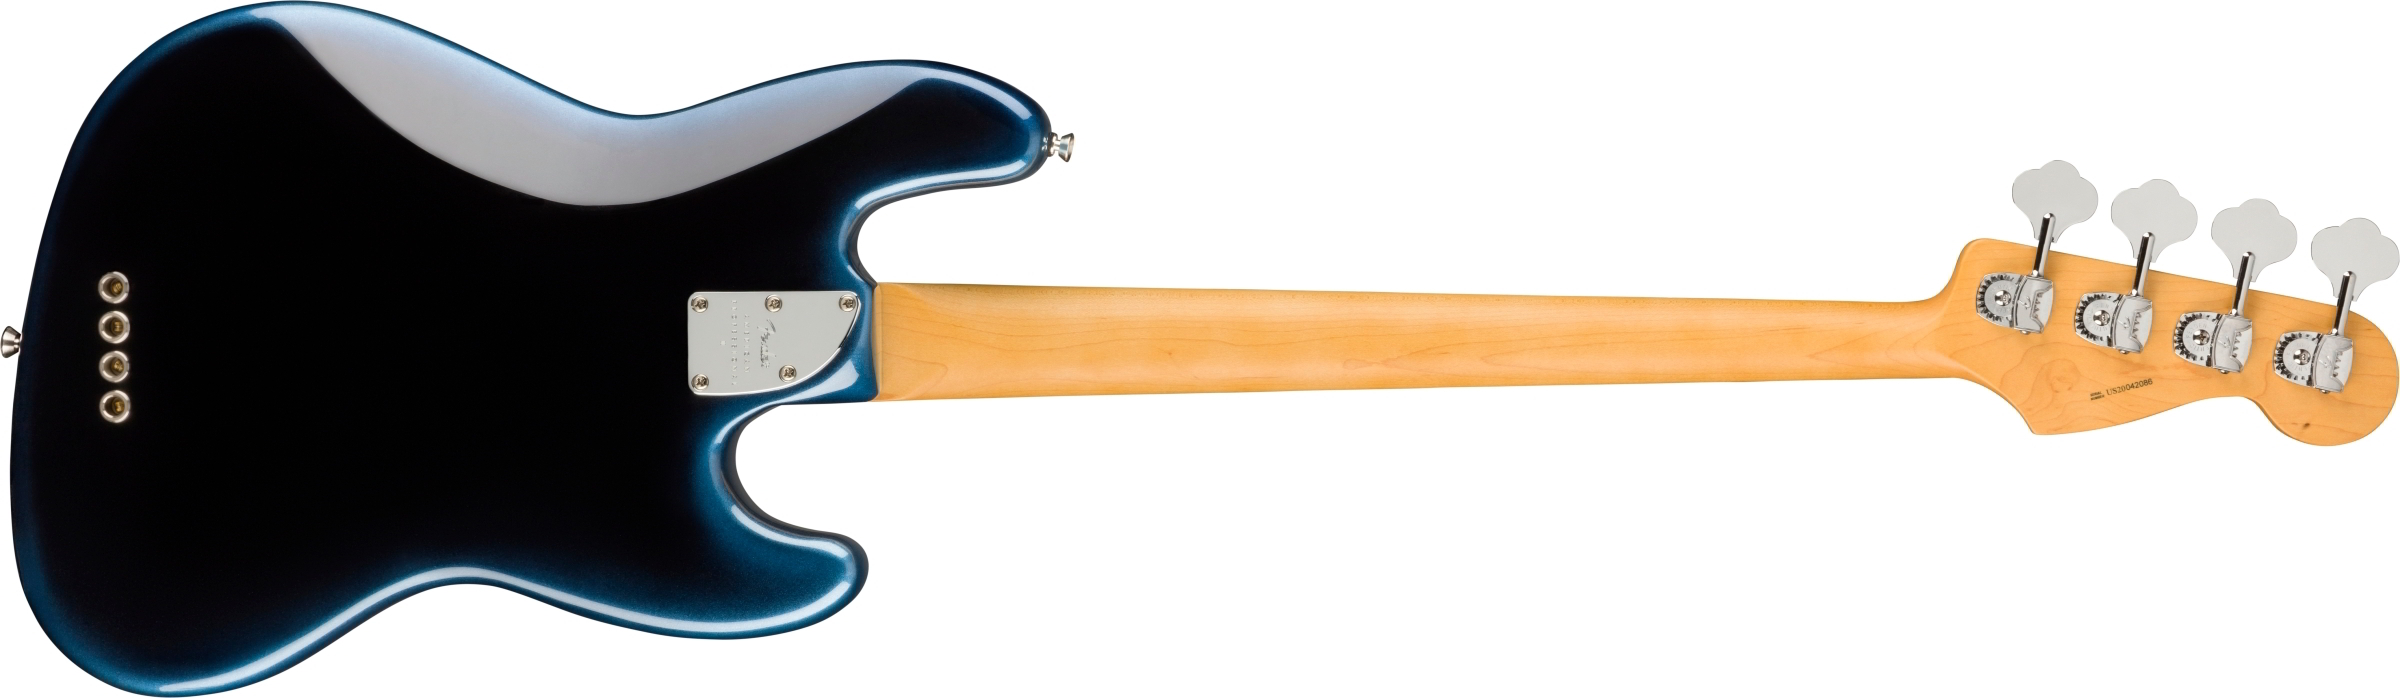 American Professional II Jazz Bass Left-Hand, Rosewood Fingerboard, Dark Night背面画像